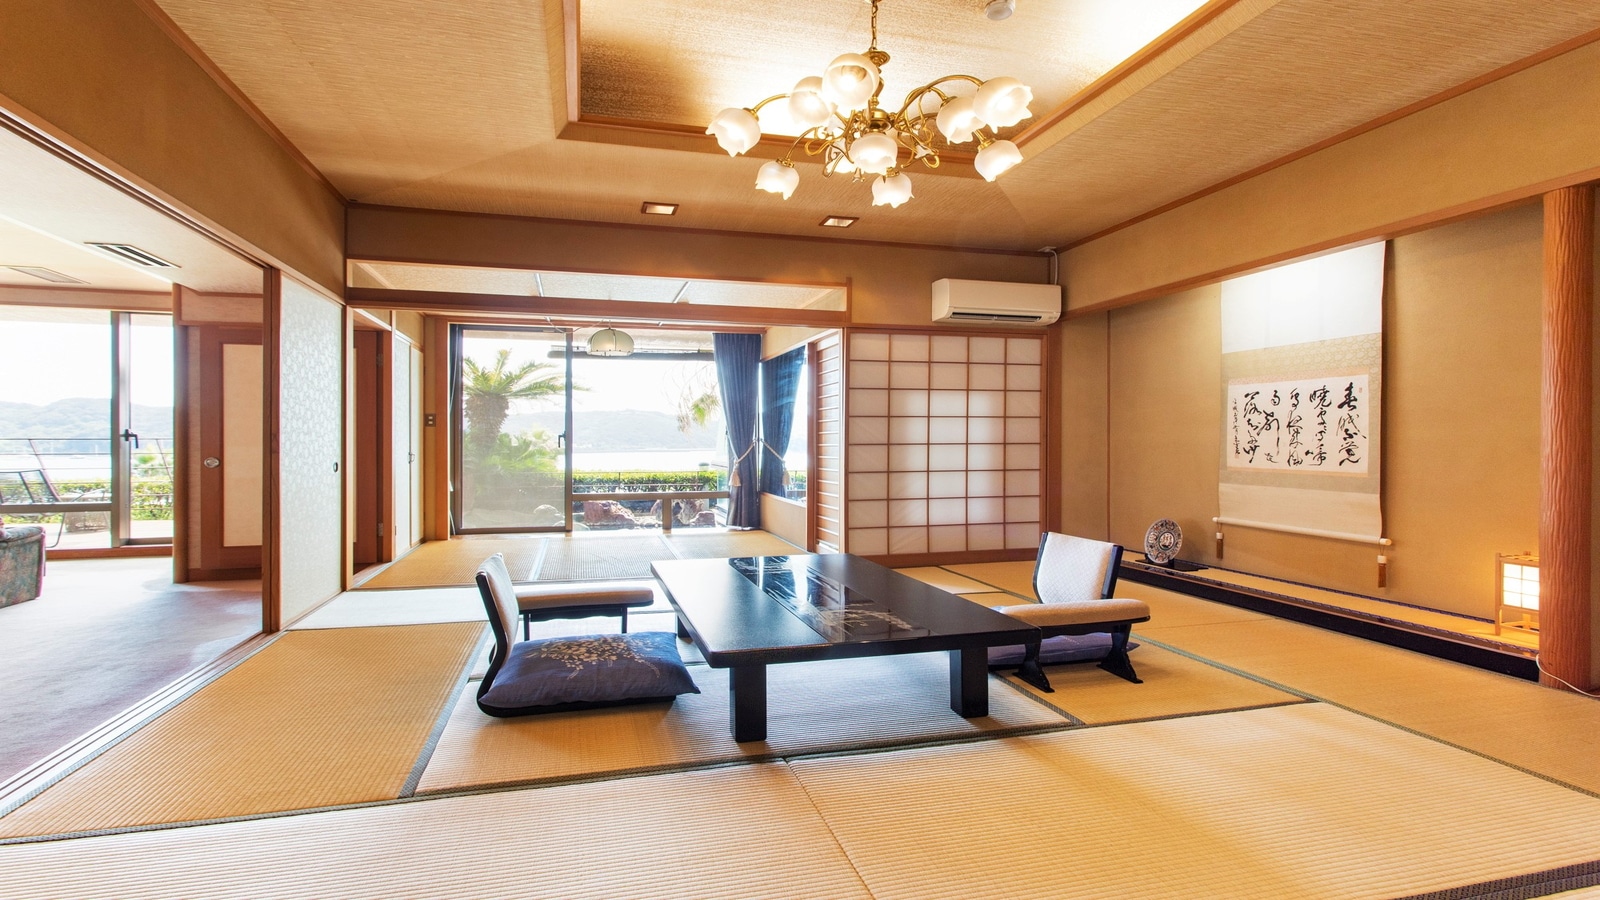 ■ Kurofune Suite ■ Honma 12.5 tatami mats + wide edge 3 tatami mats + Western-style room + cypress bath + private open-air bath + terrace